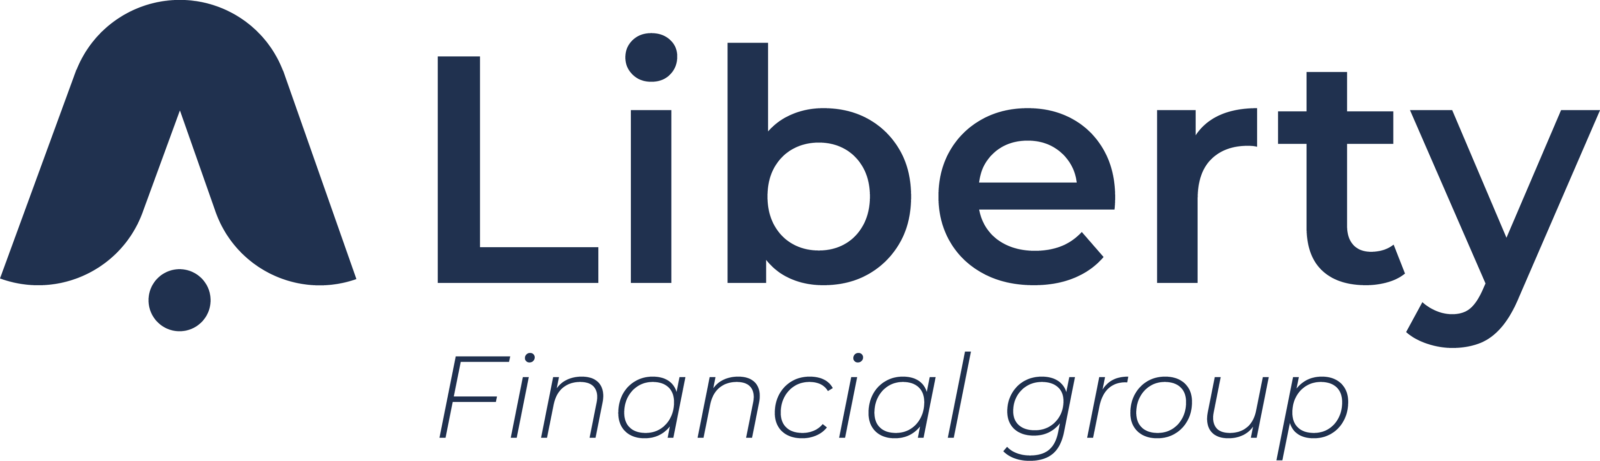 Liberty Financial Group